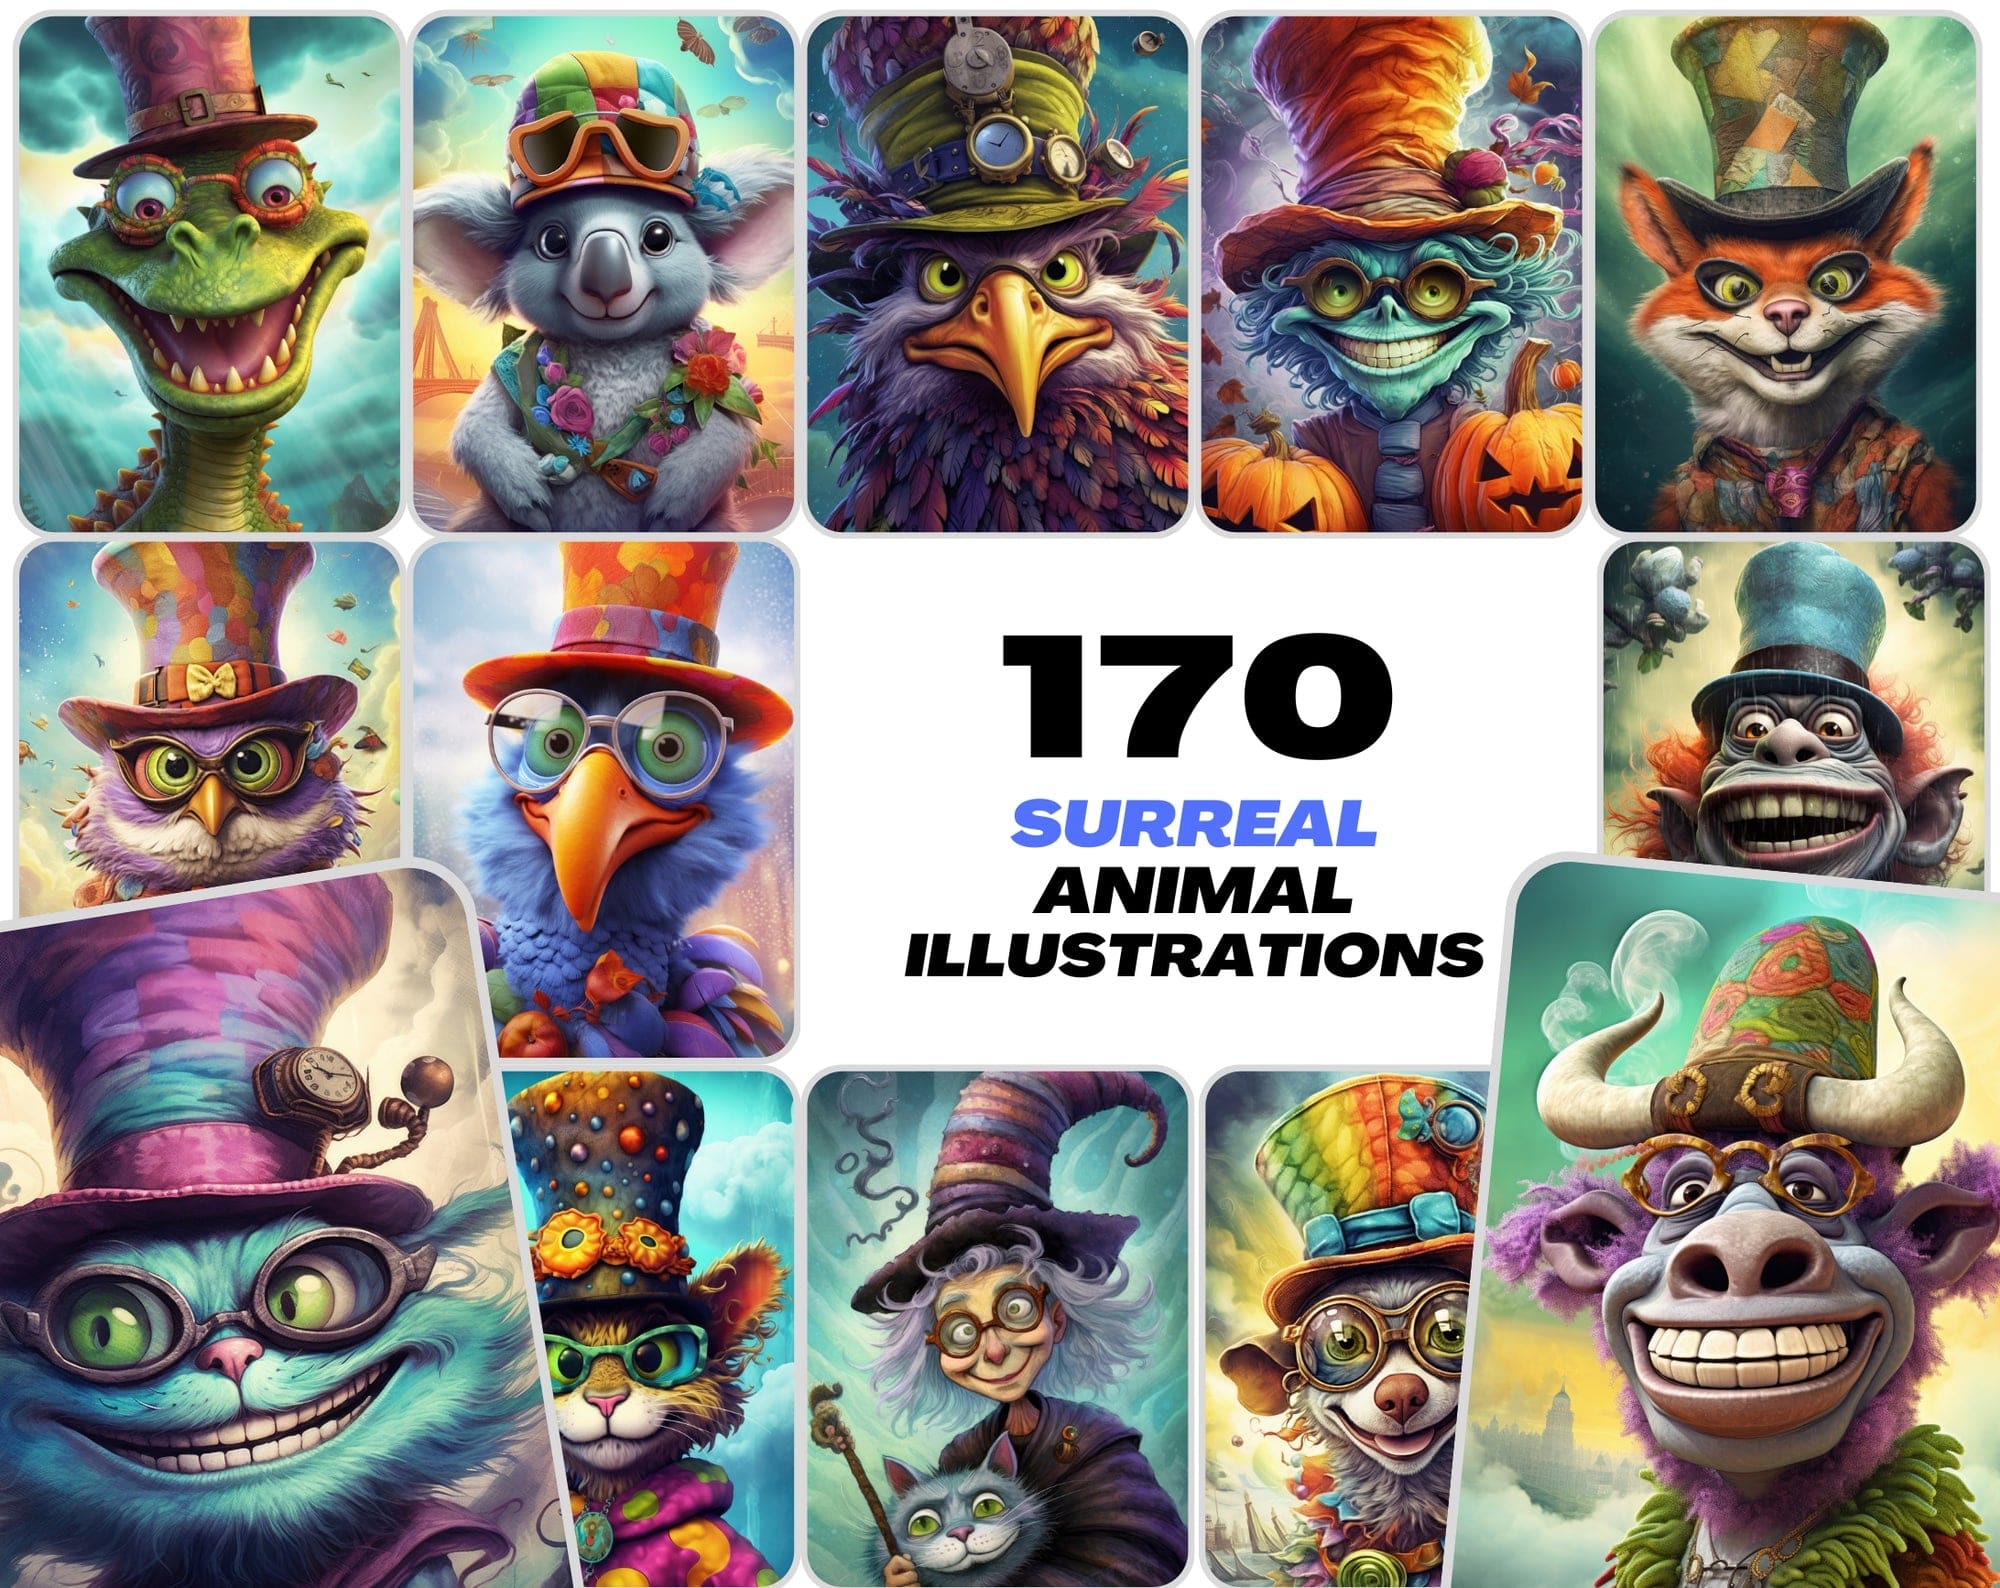 Get 170 Whimsical Surreal Animal PNG Images Bundle, Colourful Characters with Big Grins Digital Download Sumobundle